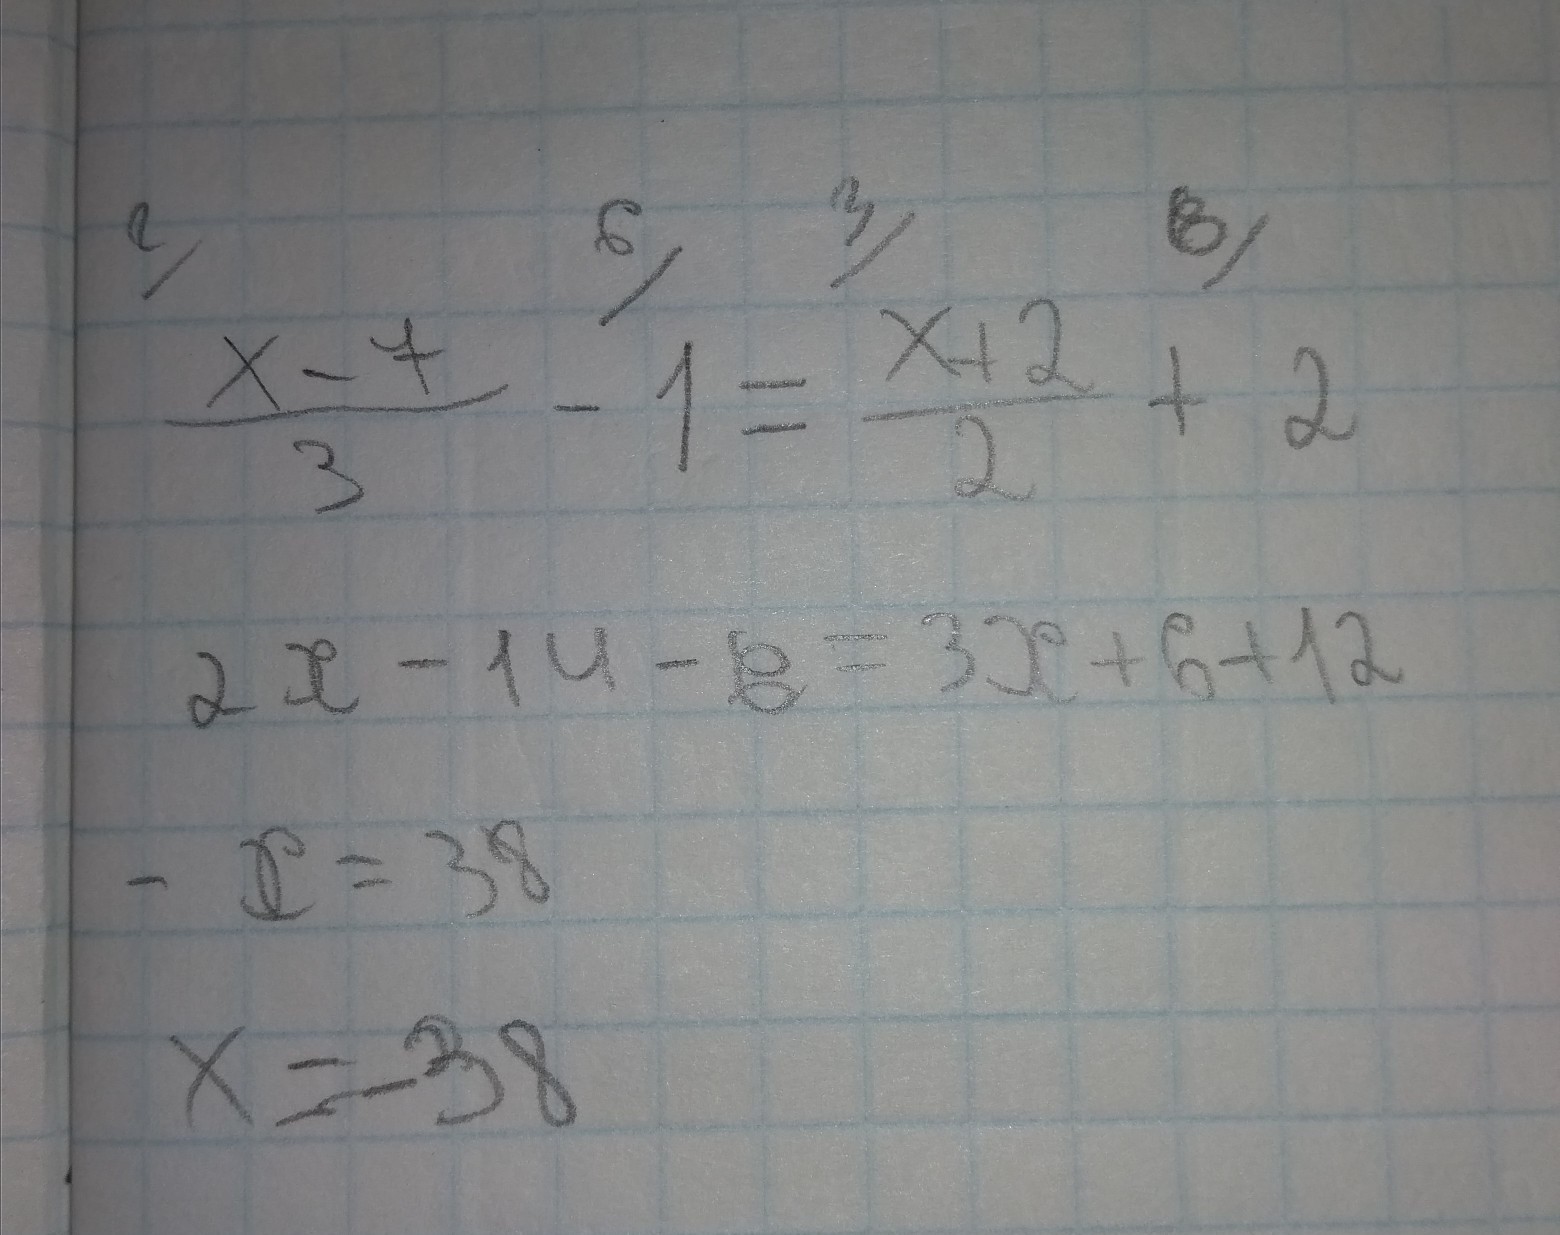 3х 7 19 х. (Х-2)*(Х+2 сжать. Выражение (х-1)4+(х-1)2-3. Увеличение x2. 3. Найдите значение выражения -х(х-7)+(х+5)(х-5) при х= три седьмых.